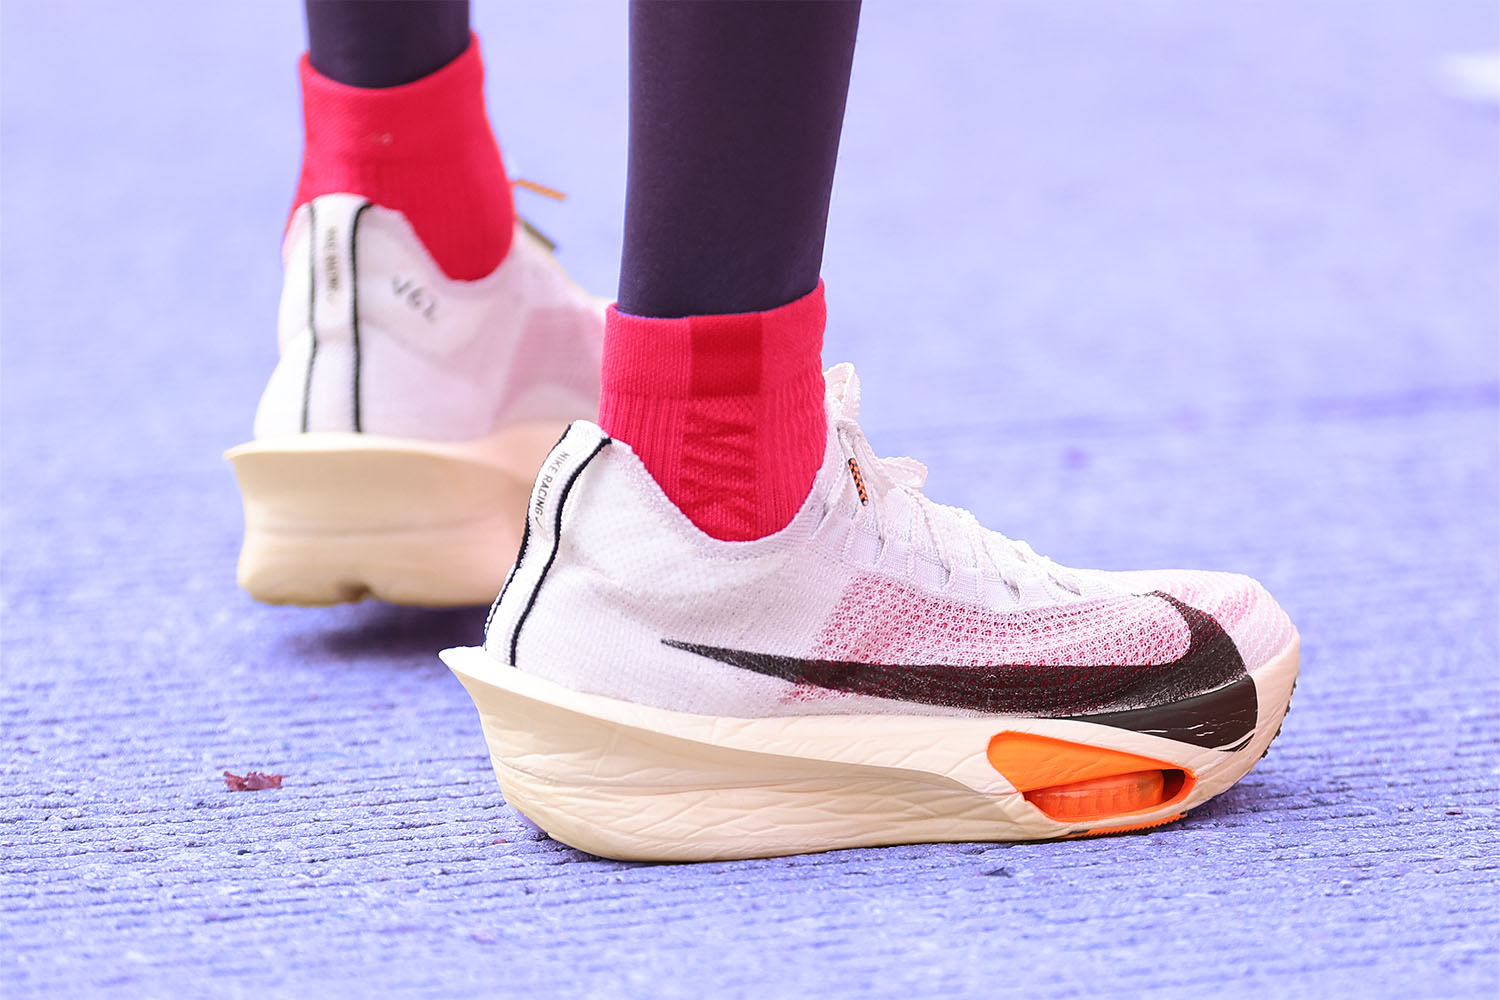 Nike's Latest Super Shoe, The Alphafly 3, Is Finally Here - InsideHook